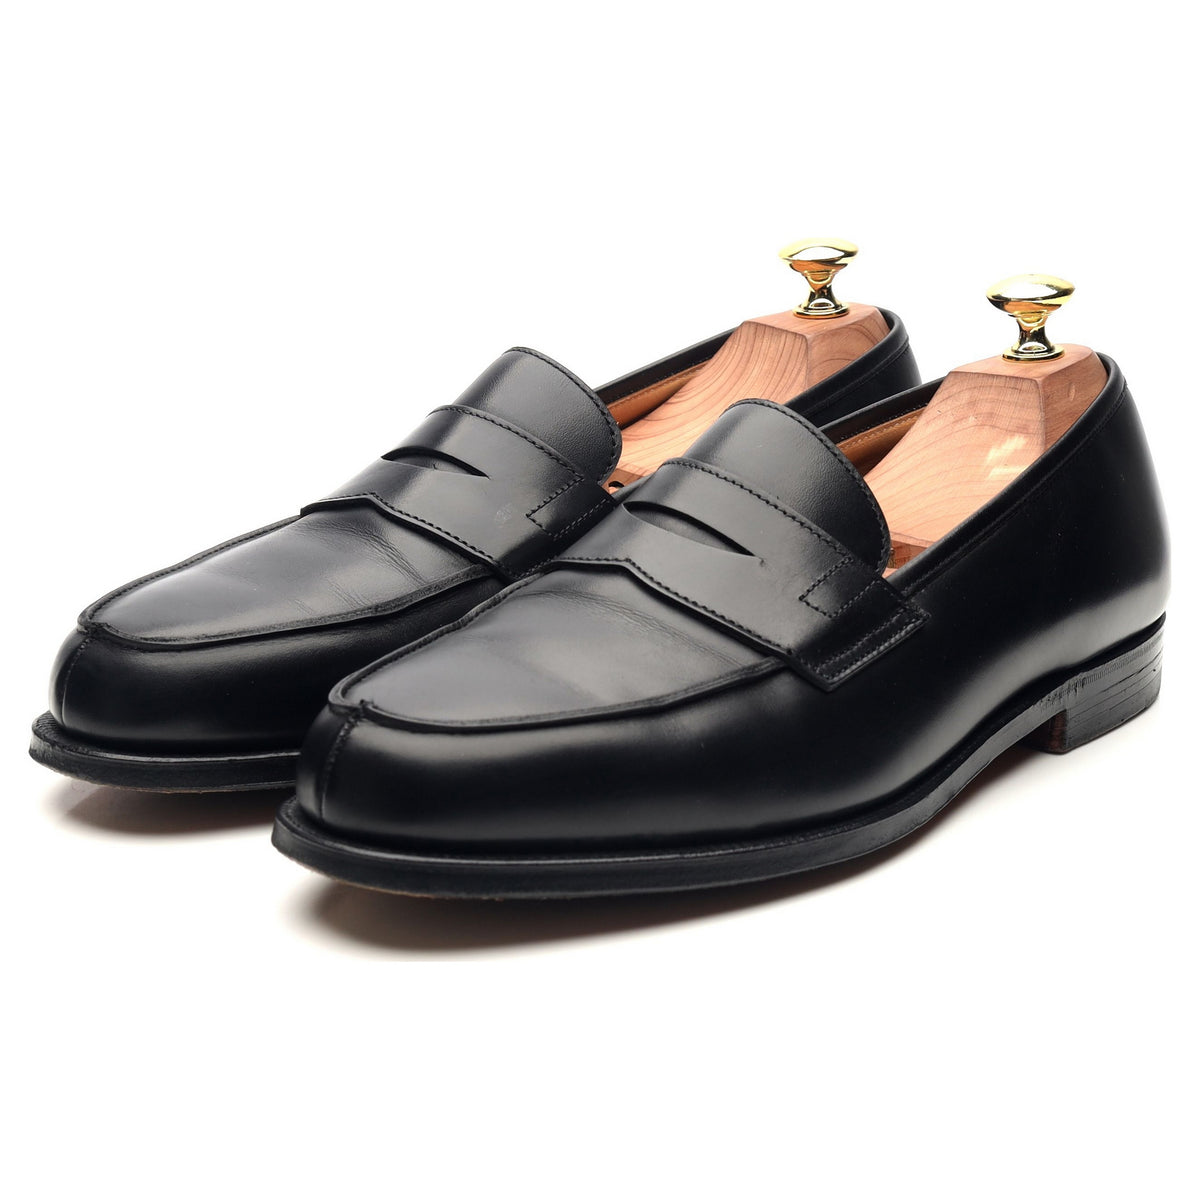 Black Leather Loafers UK 8.5 E